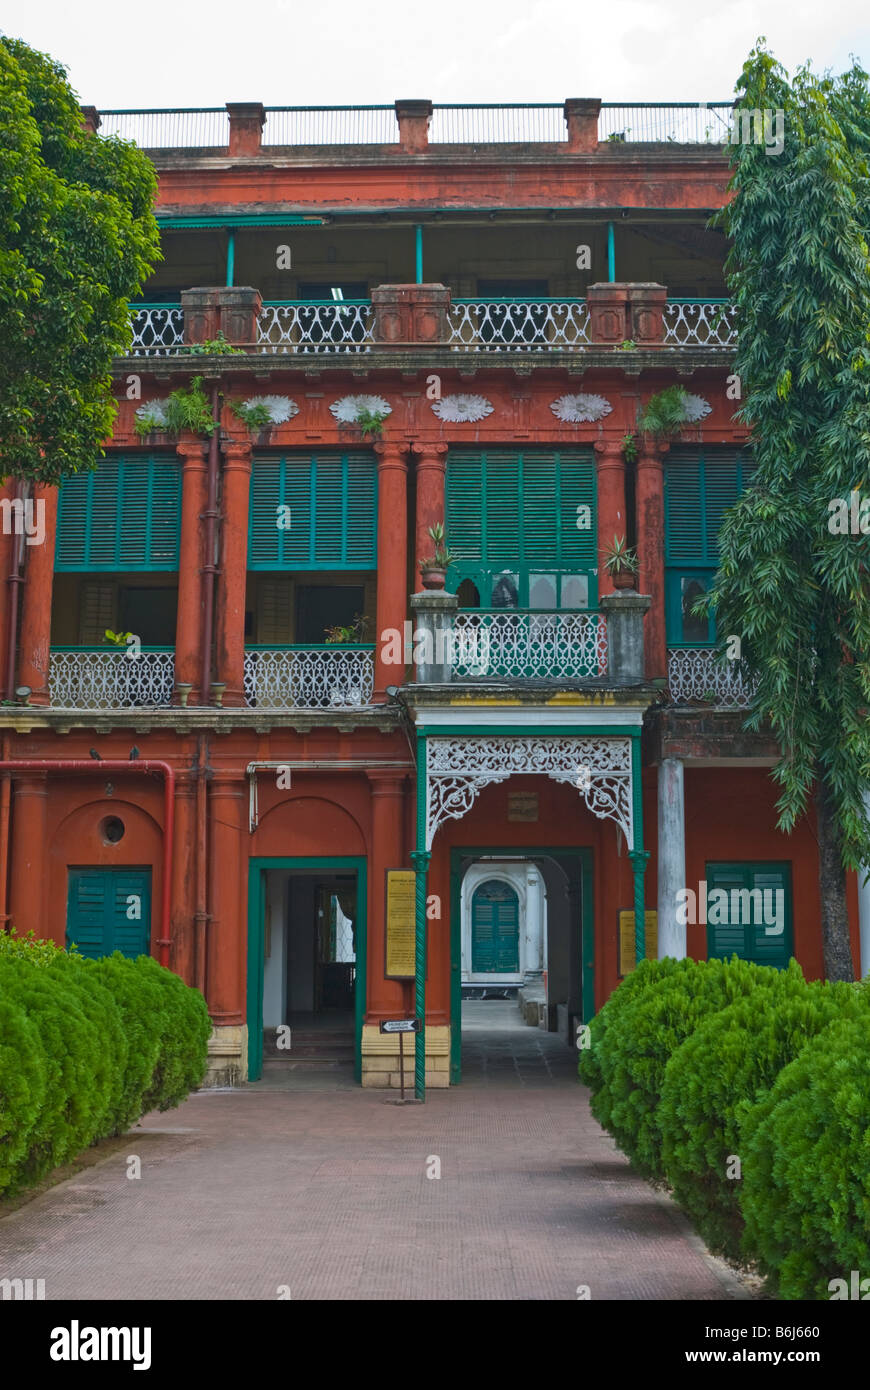 The Bengali poet Tagore's house in Kolkata, India Stock Photo